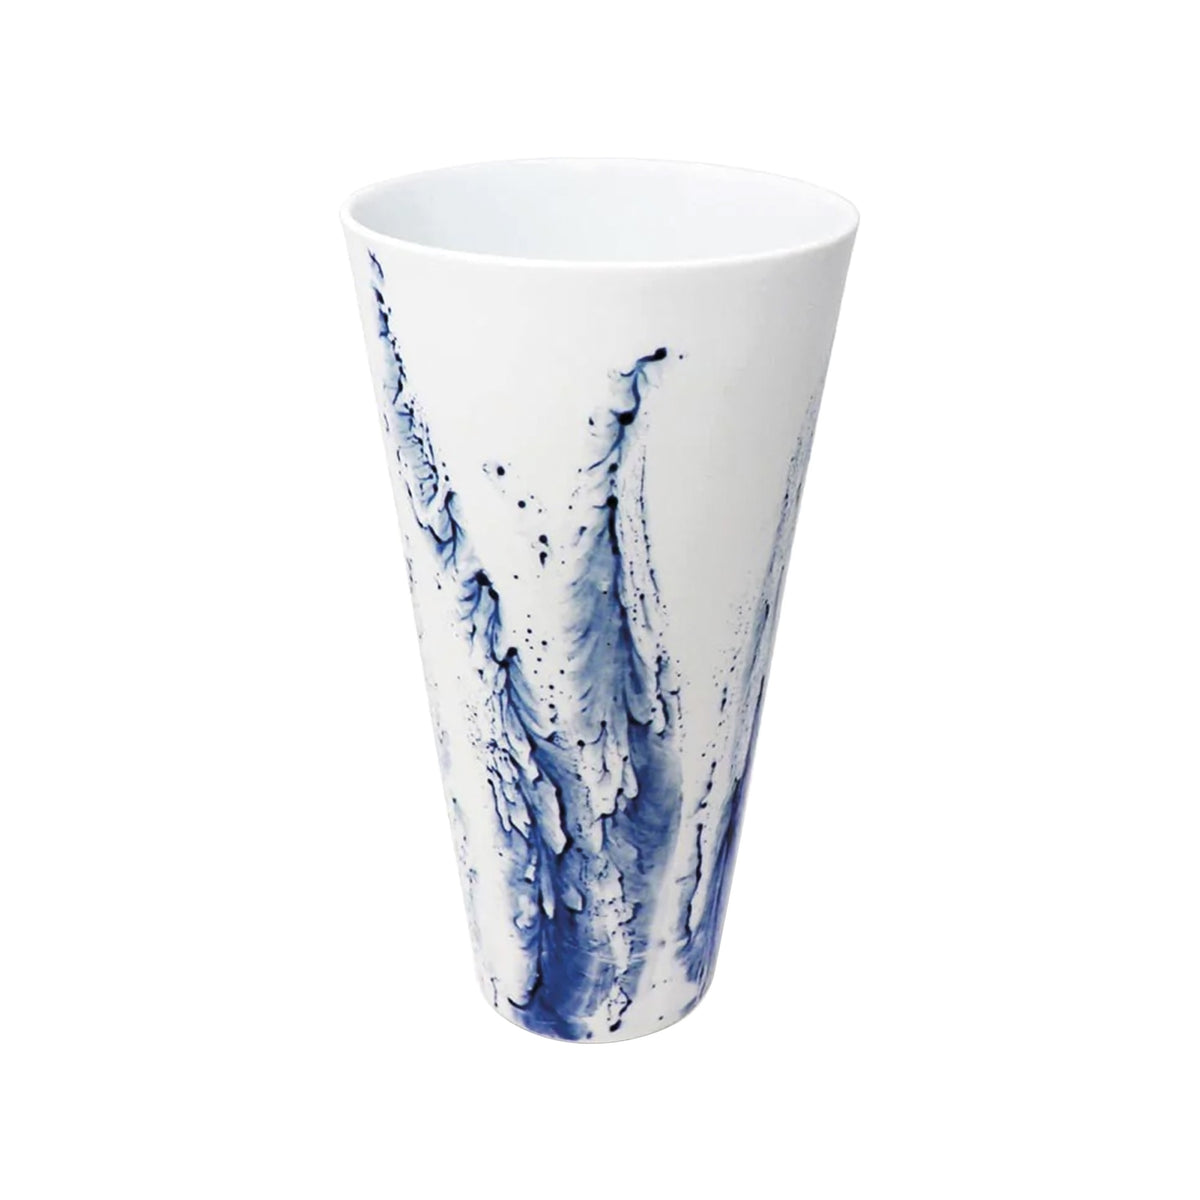 BLUE IMPRESSION - Straight vase, large